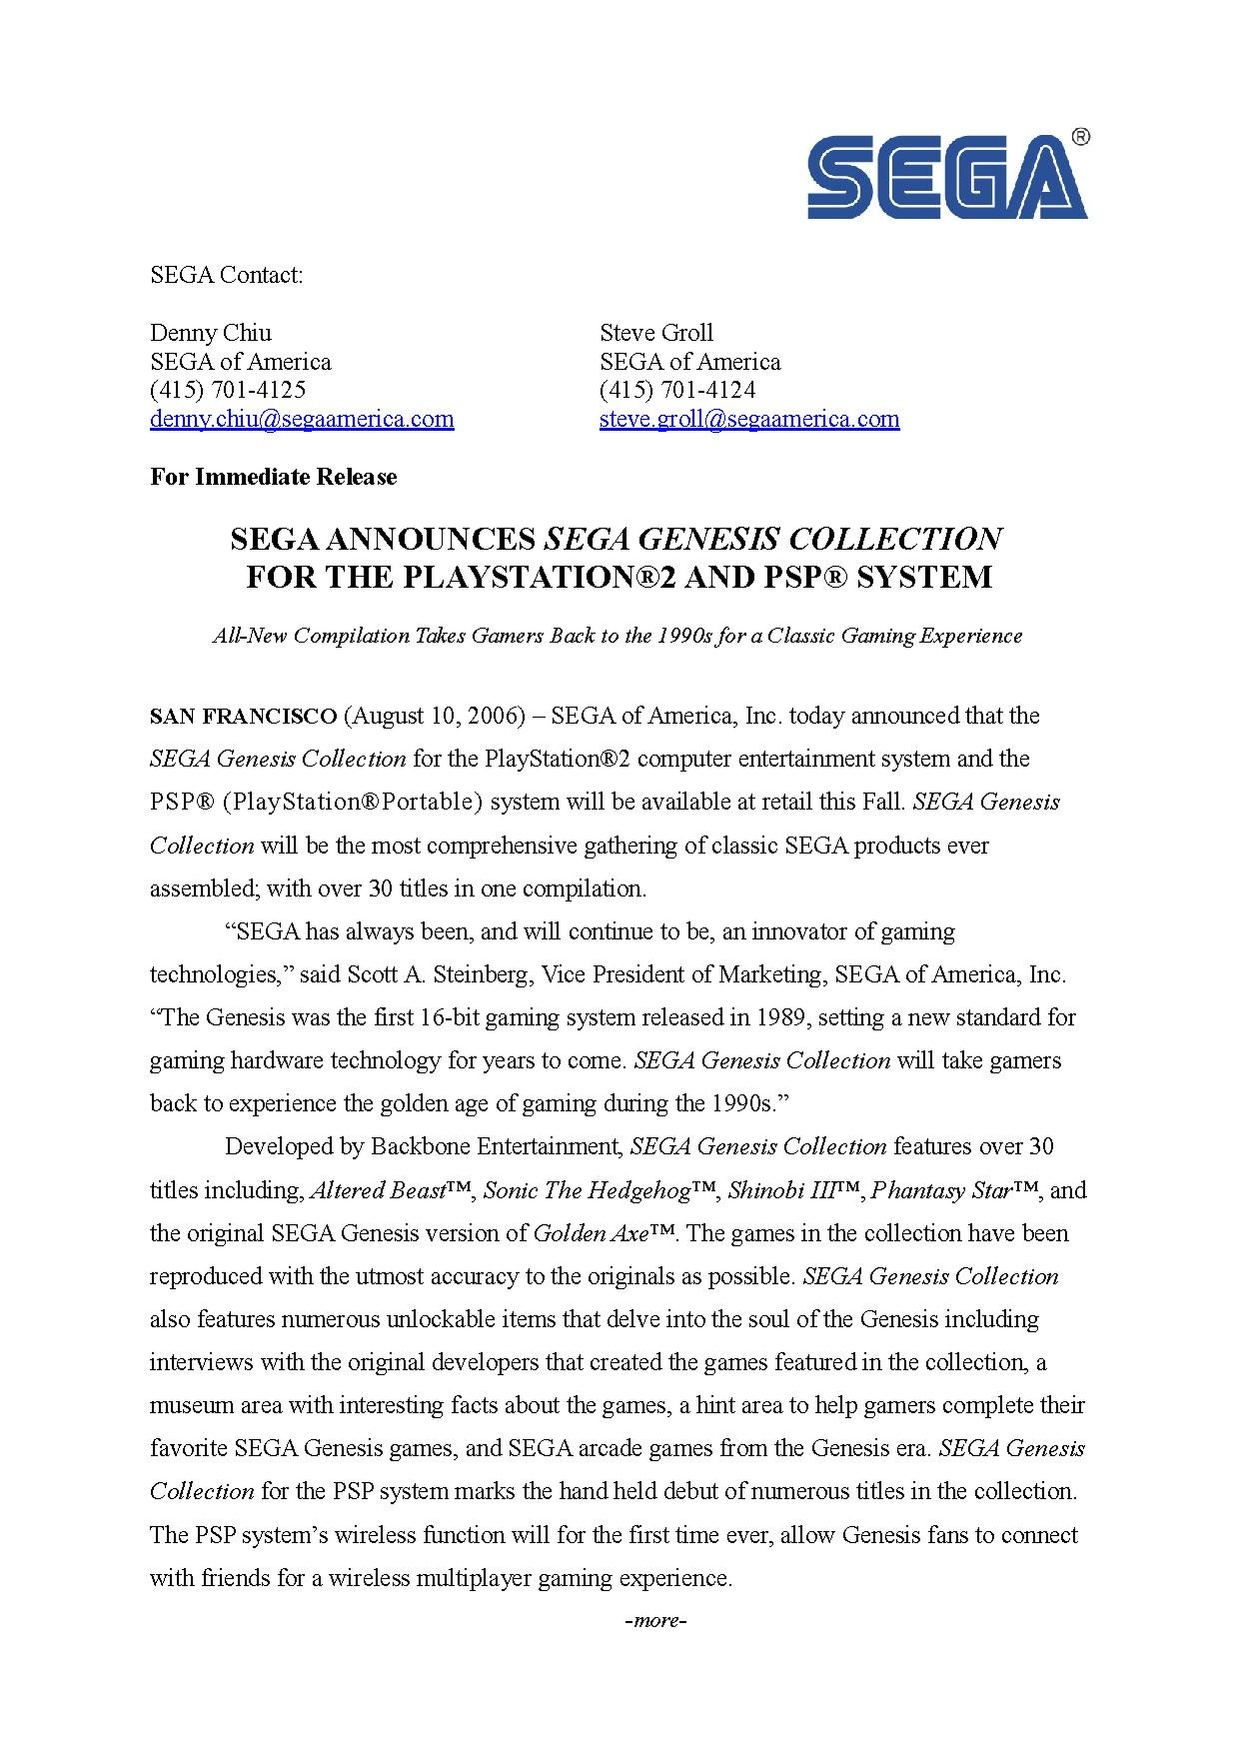 SegaGenesisCollection announce FINAL.pdf